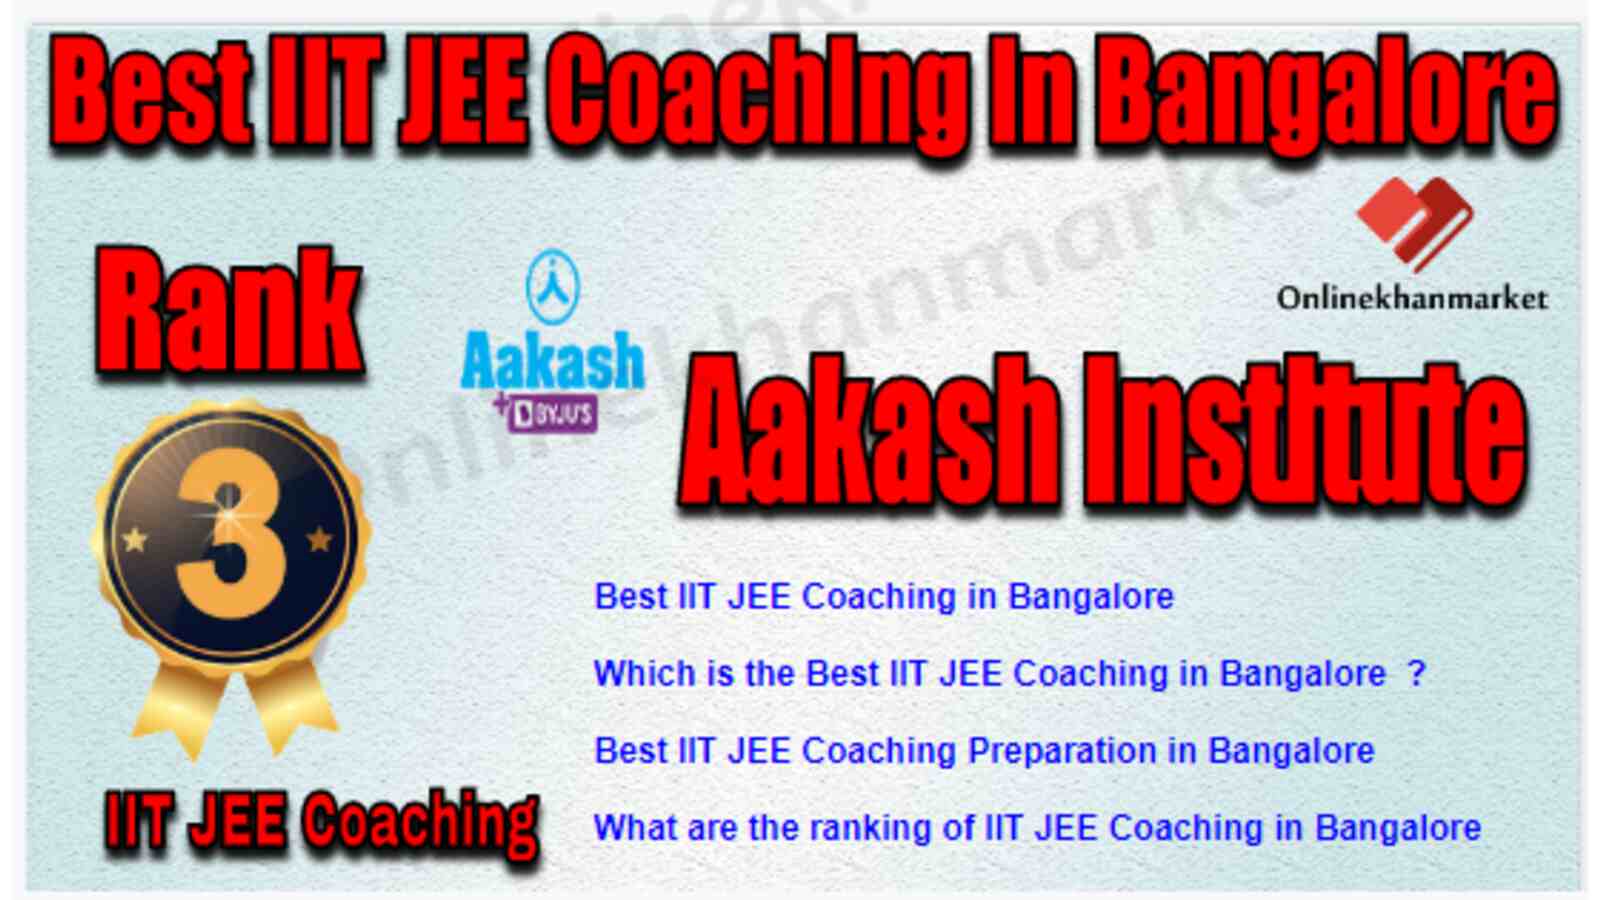 Rank 3 Best IIT JEE Coaching in Bangalore